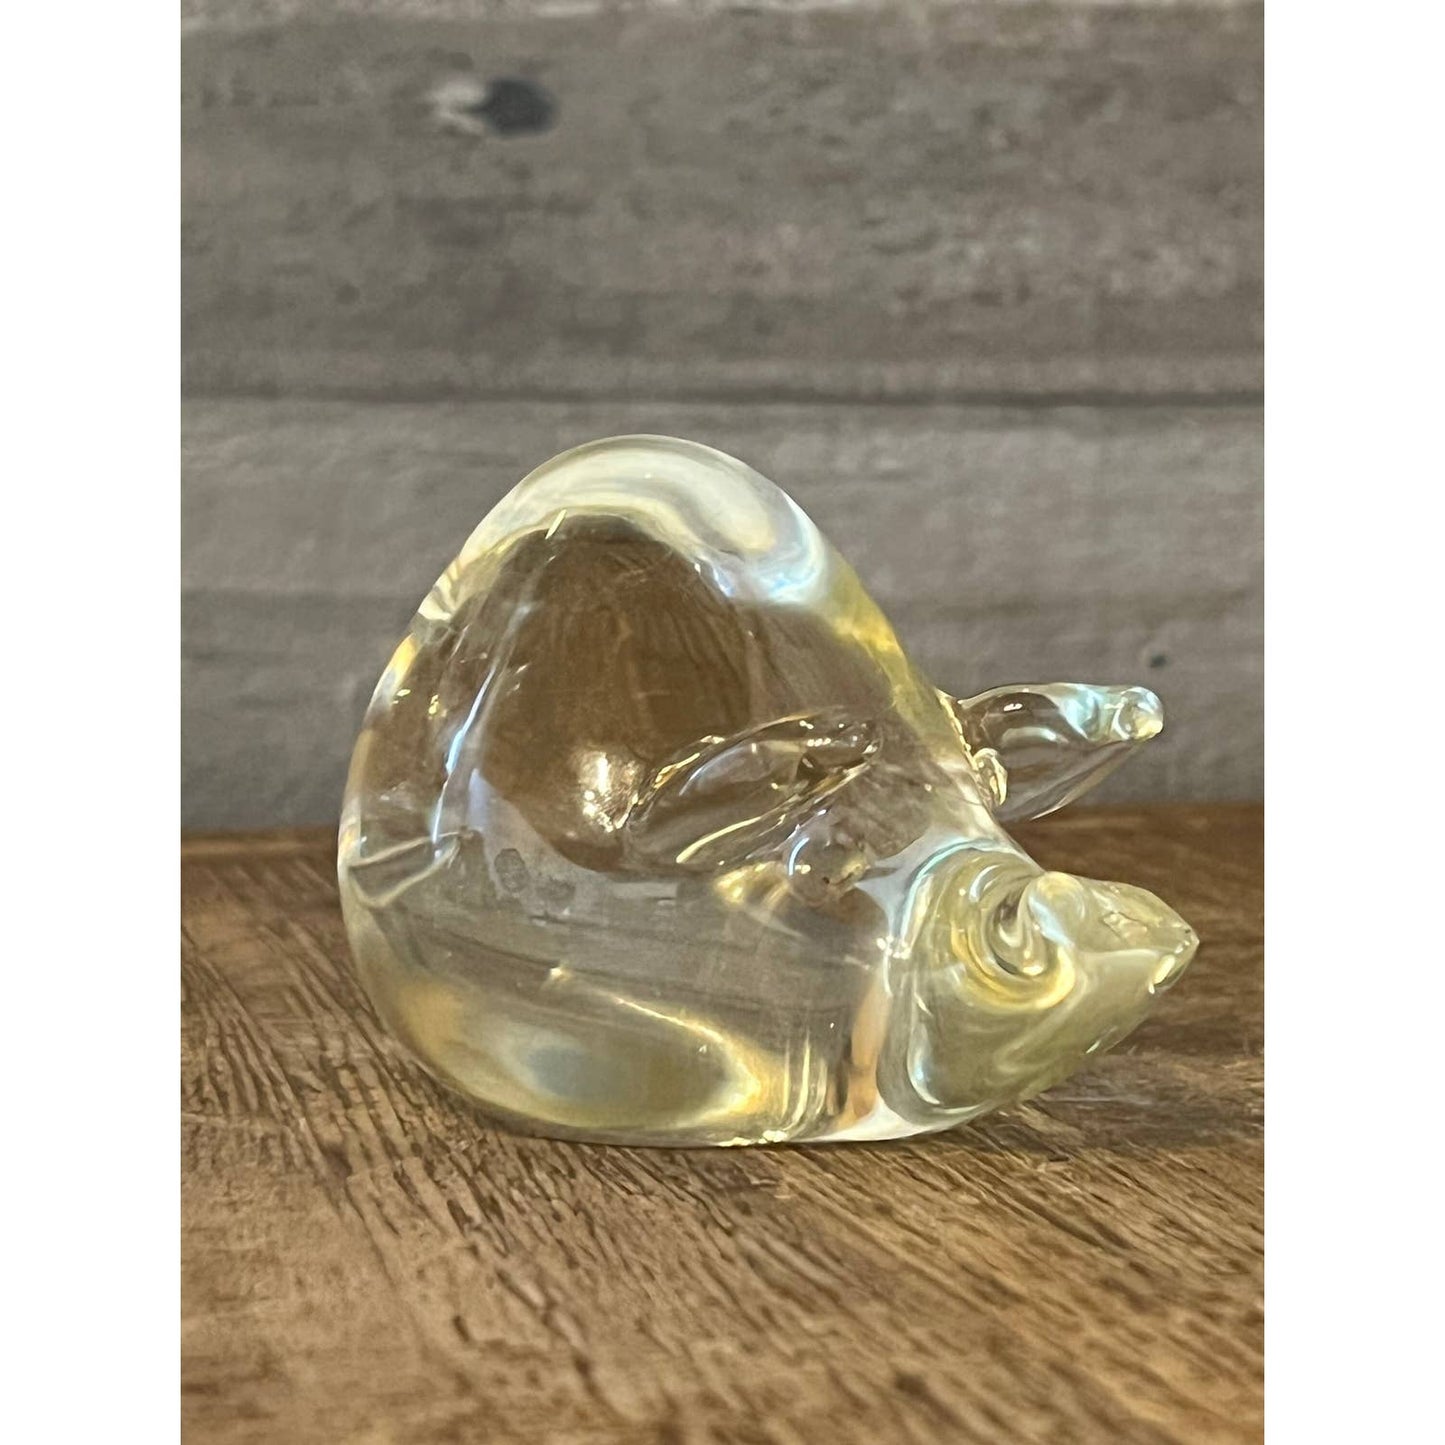 Petite clear glass blown pig figurine